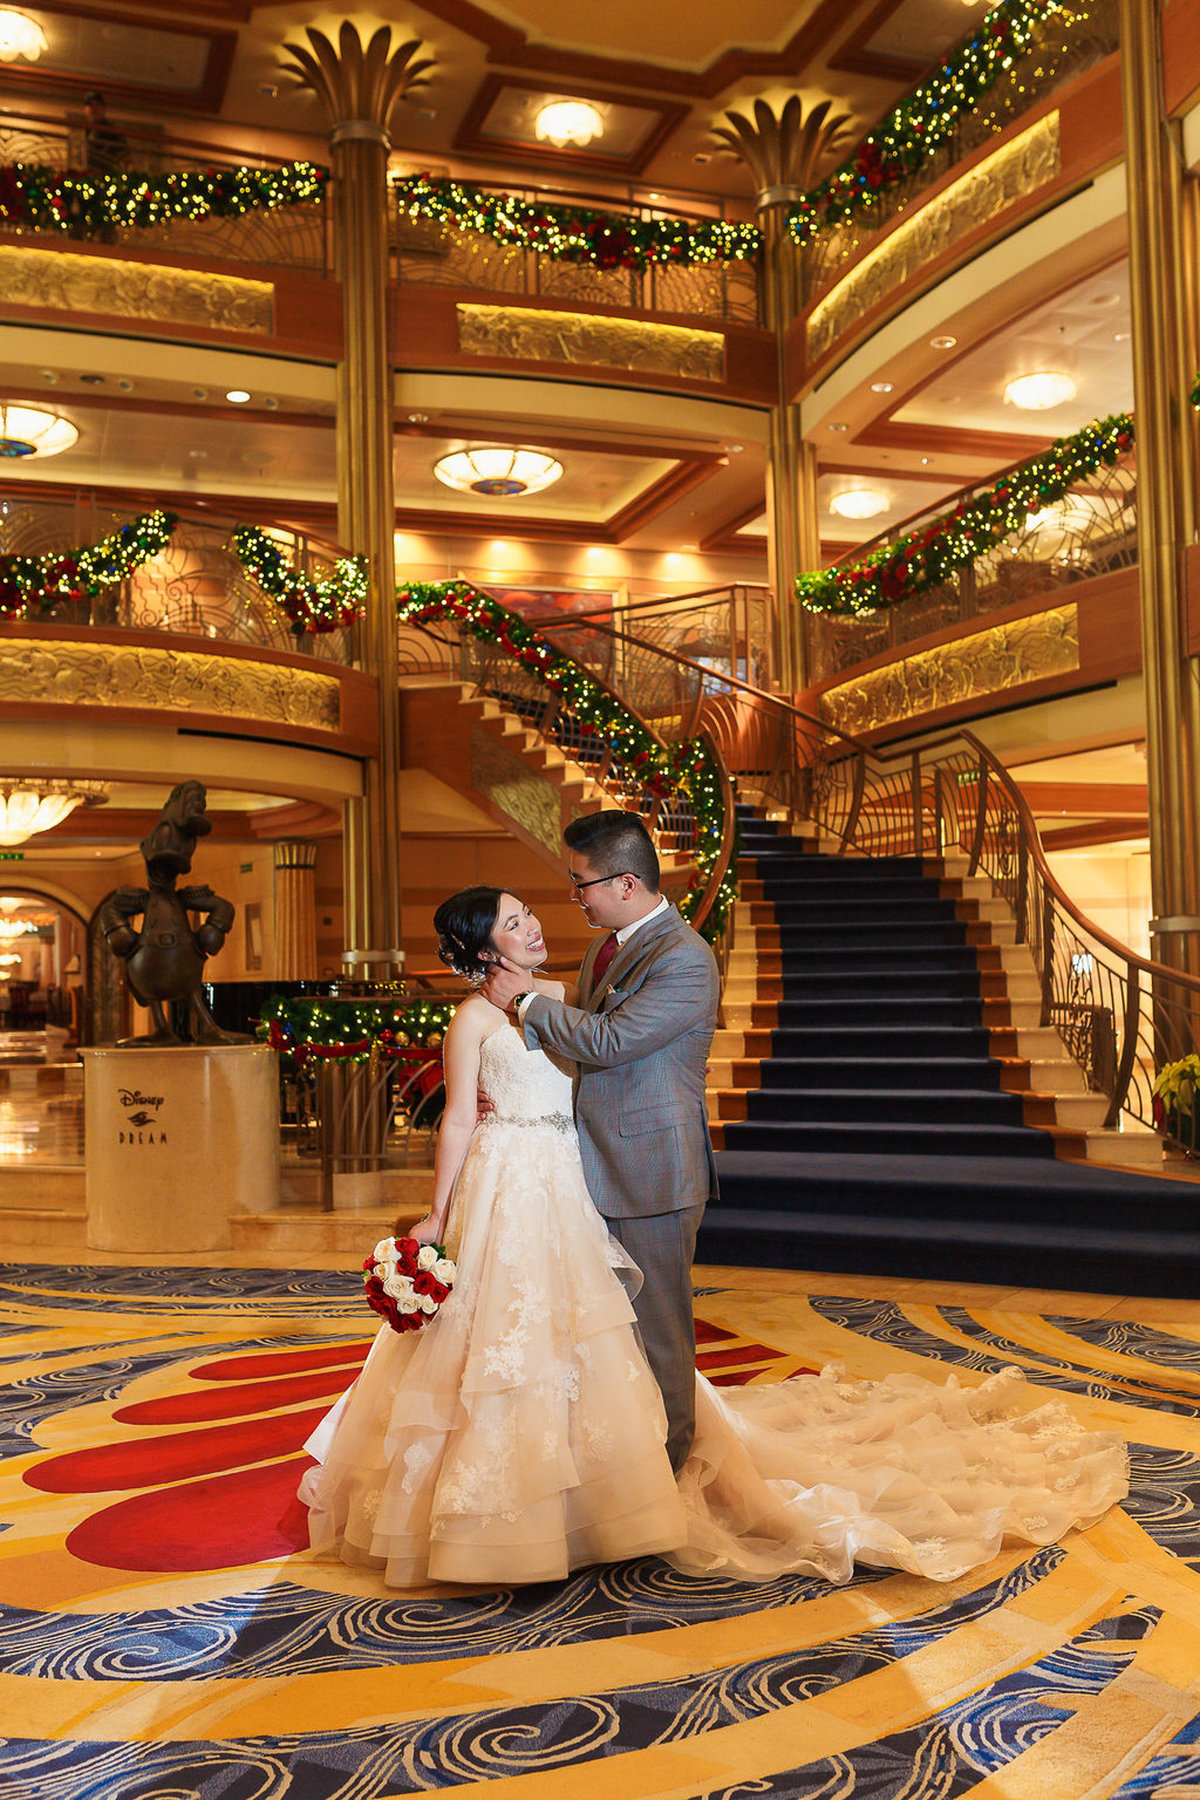 Disney-Cruise-Bride-Disney-Dream-On-Board-Wedding-Nassau-Bahamas-Jessica-Lea-IMG-180